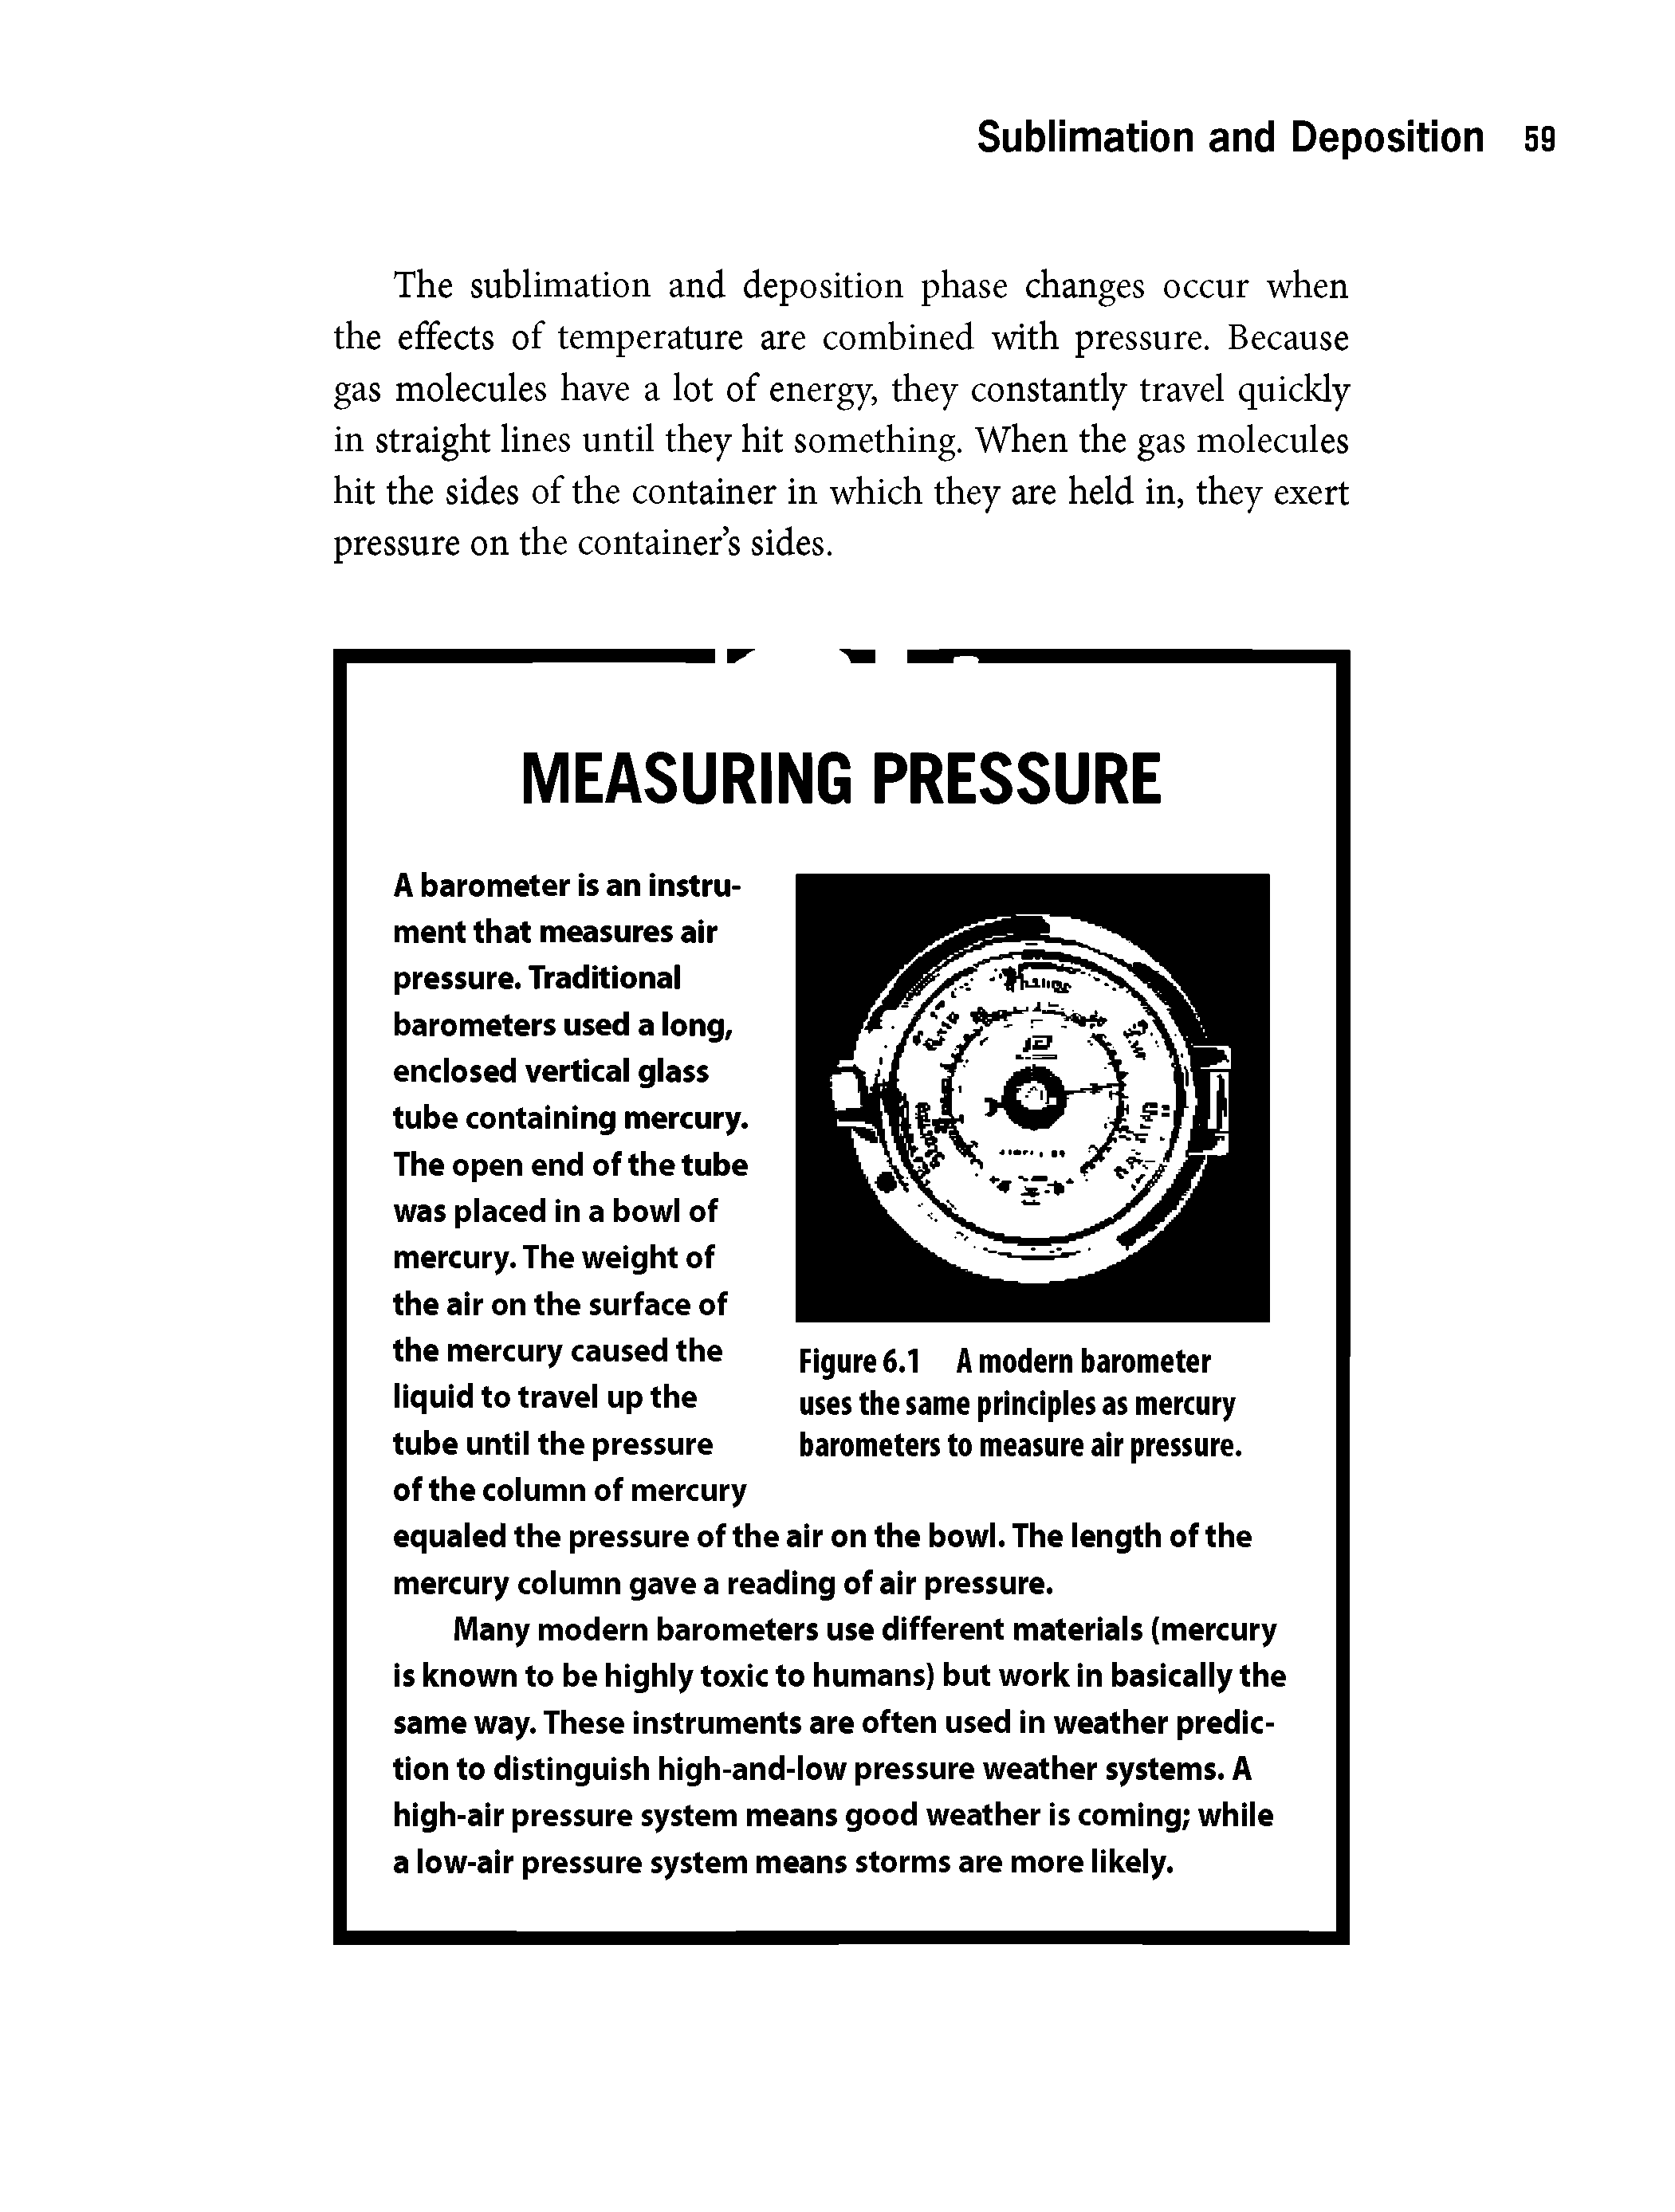 Figure 6.1 A modern barometer uses the same principles as mercury barometers to measure air pressure.